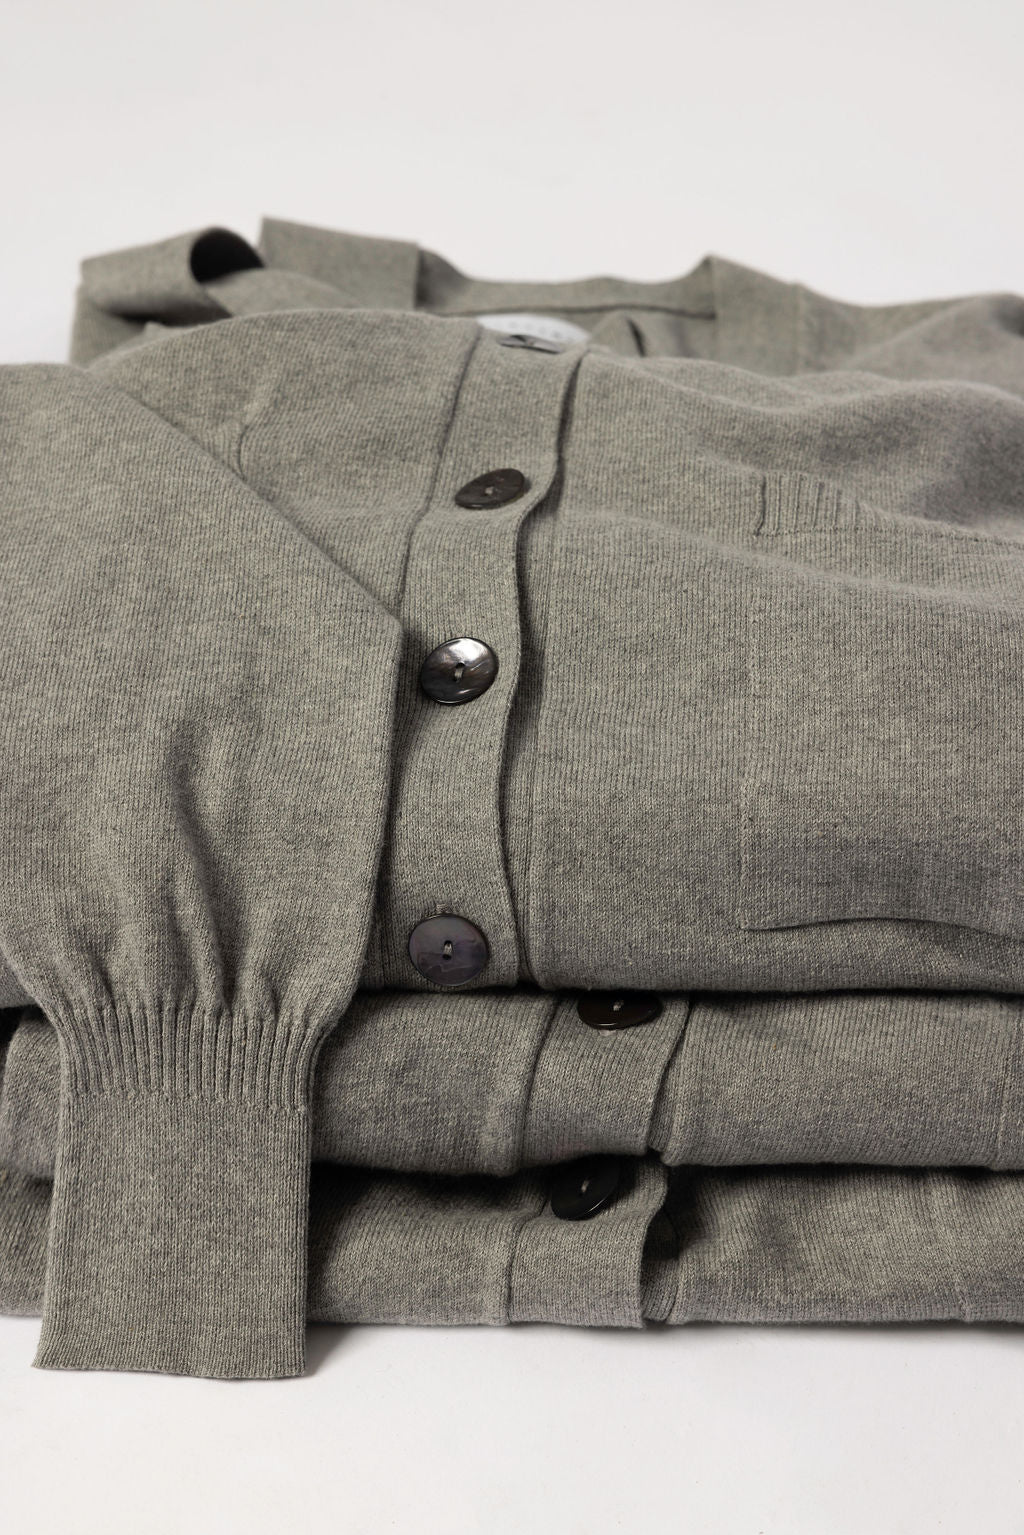 Minimalist Capsule Wardrobe 100% Organic Cotton Gray Cardigan Sweater Dress Folded